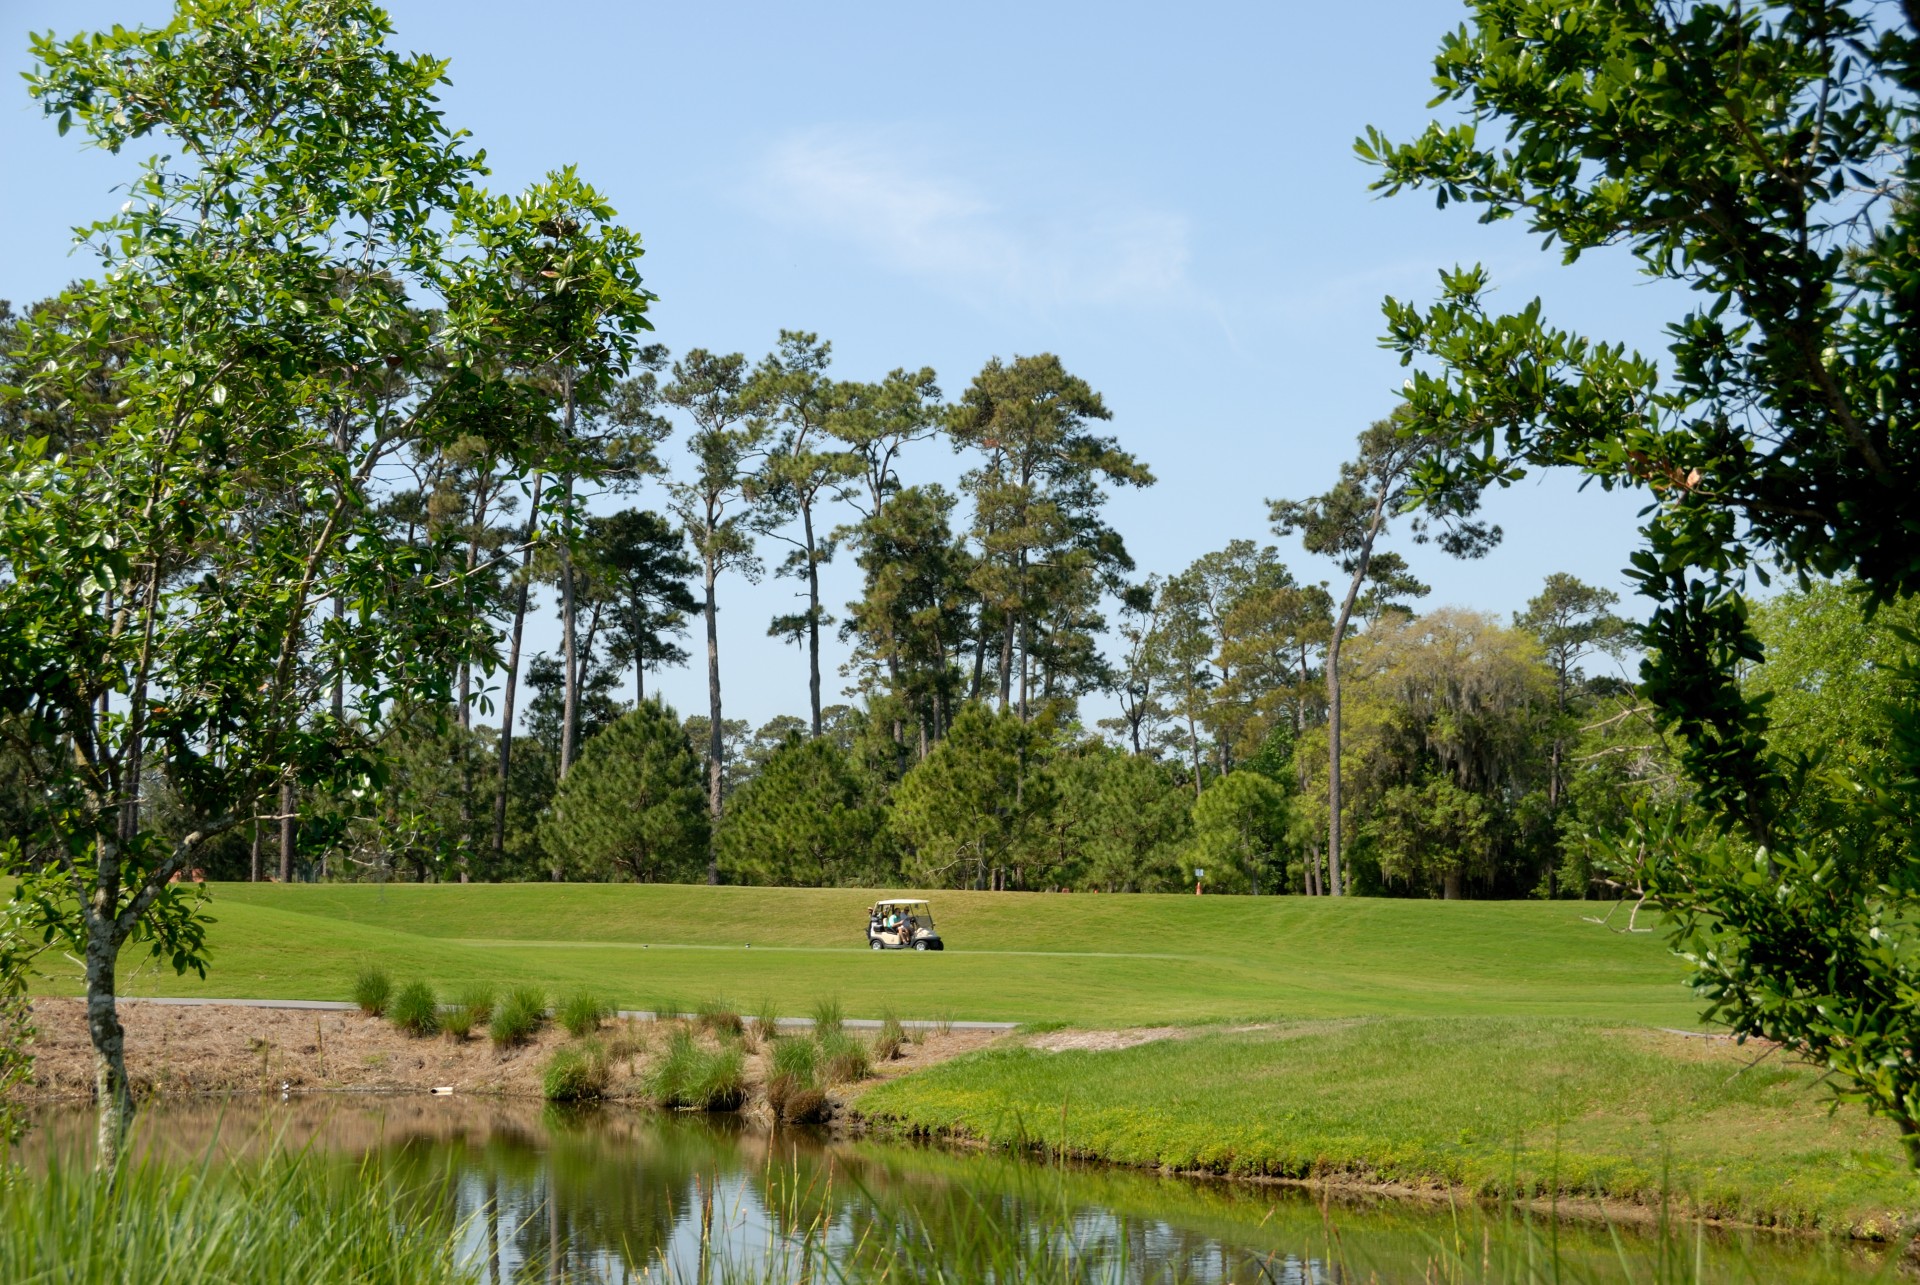 Golf course greens at Florida, USA